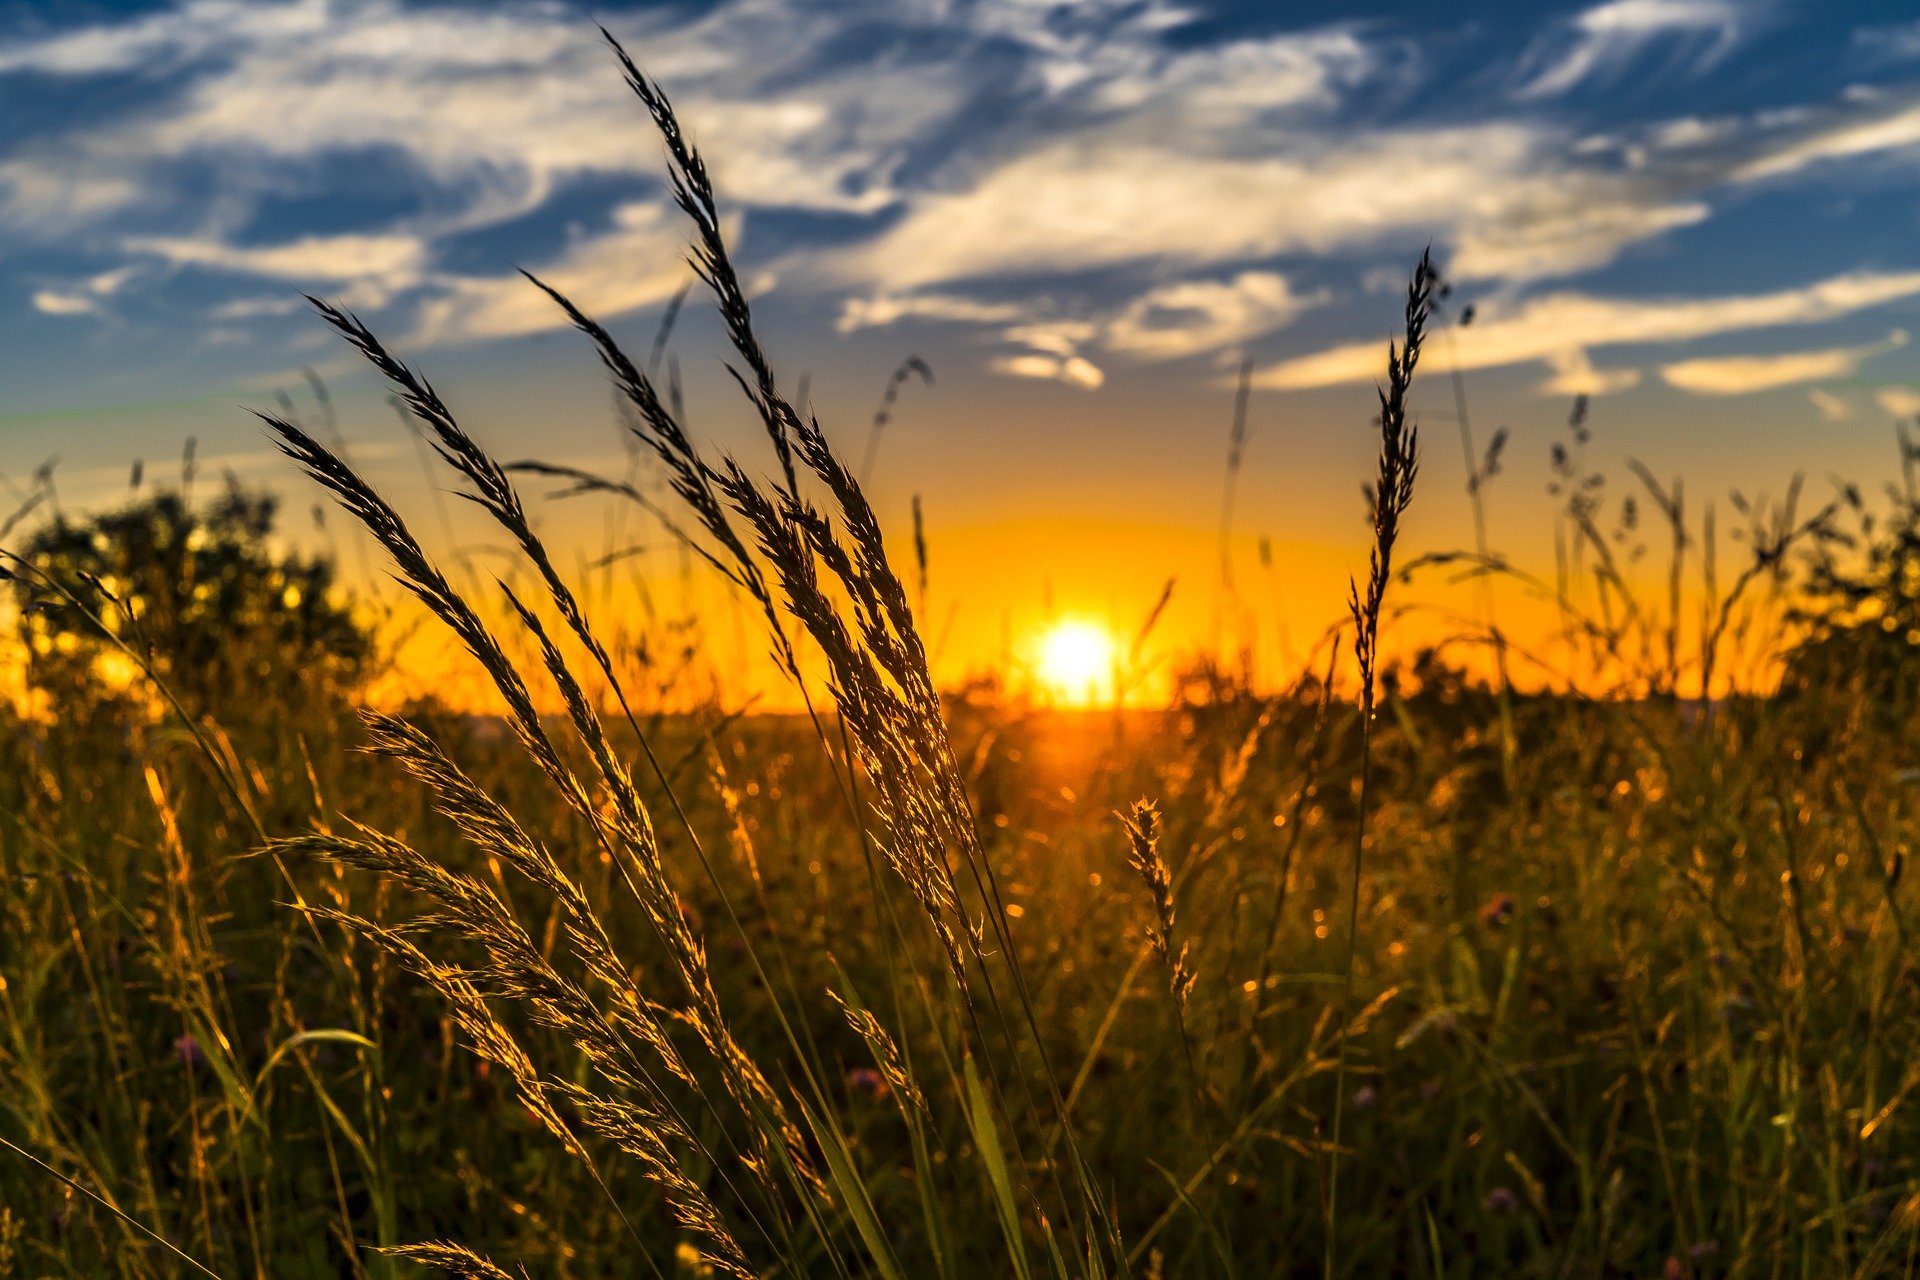 setting sun in field of wheat